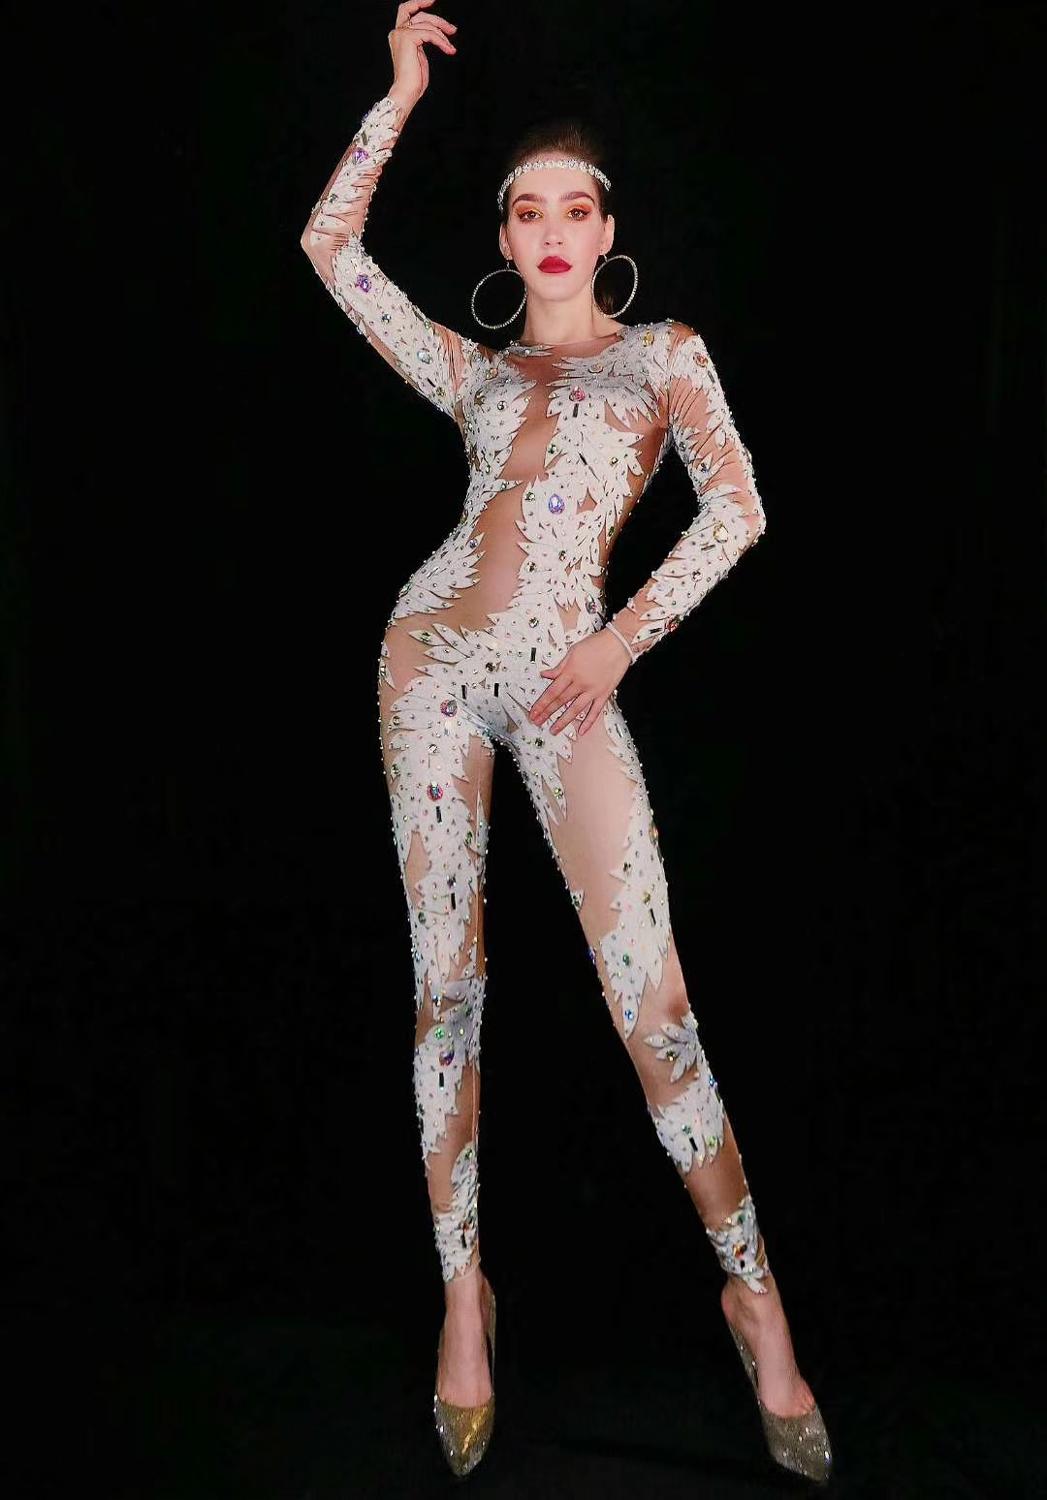 Rhinestones Jumpsuit Elastic Legging Crystal Rompers Sexy Stage Costumes Women Nightclub Party Singer Dancer Bodysuits